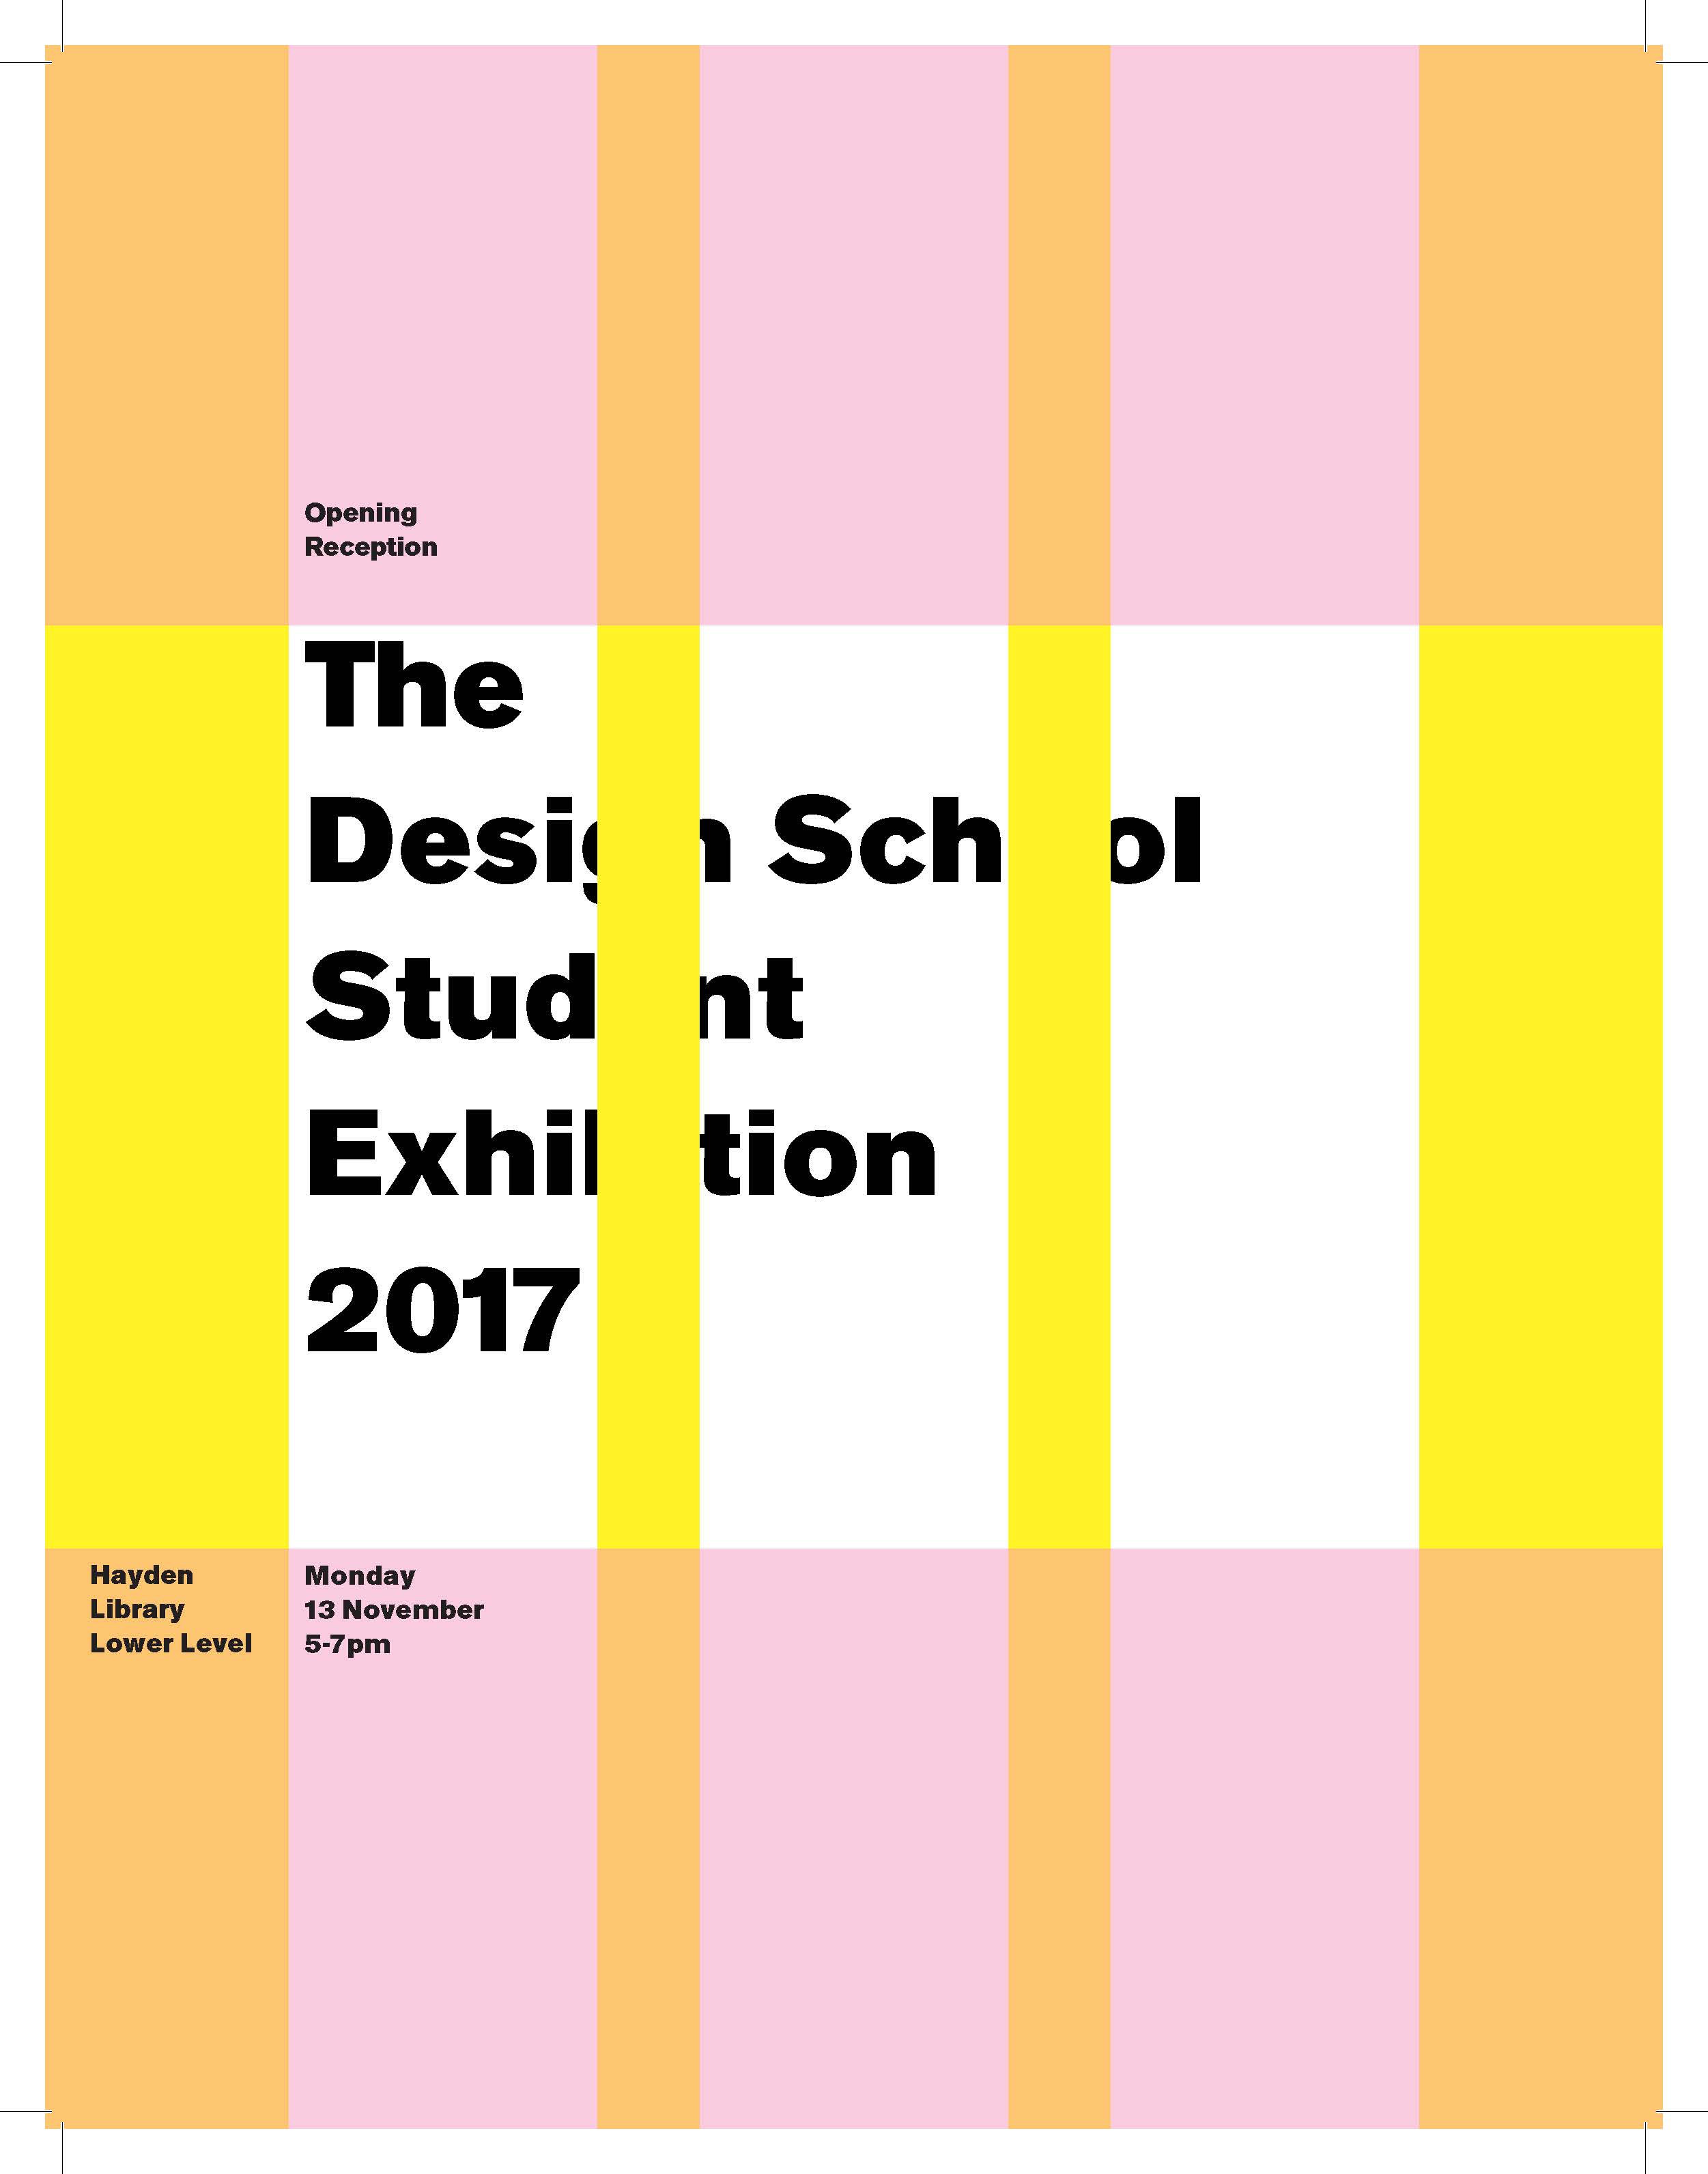 The Design School Student Exhibition 2017